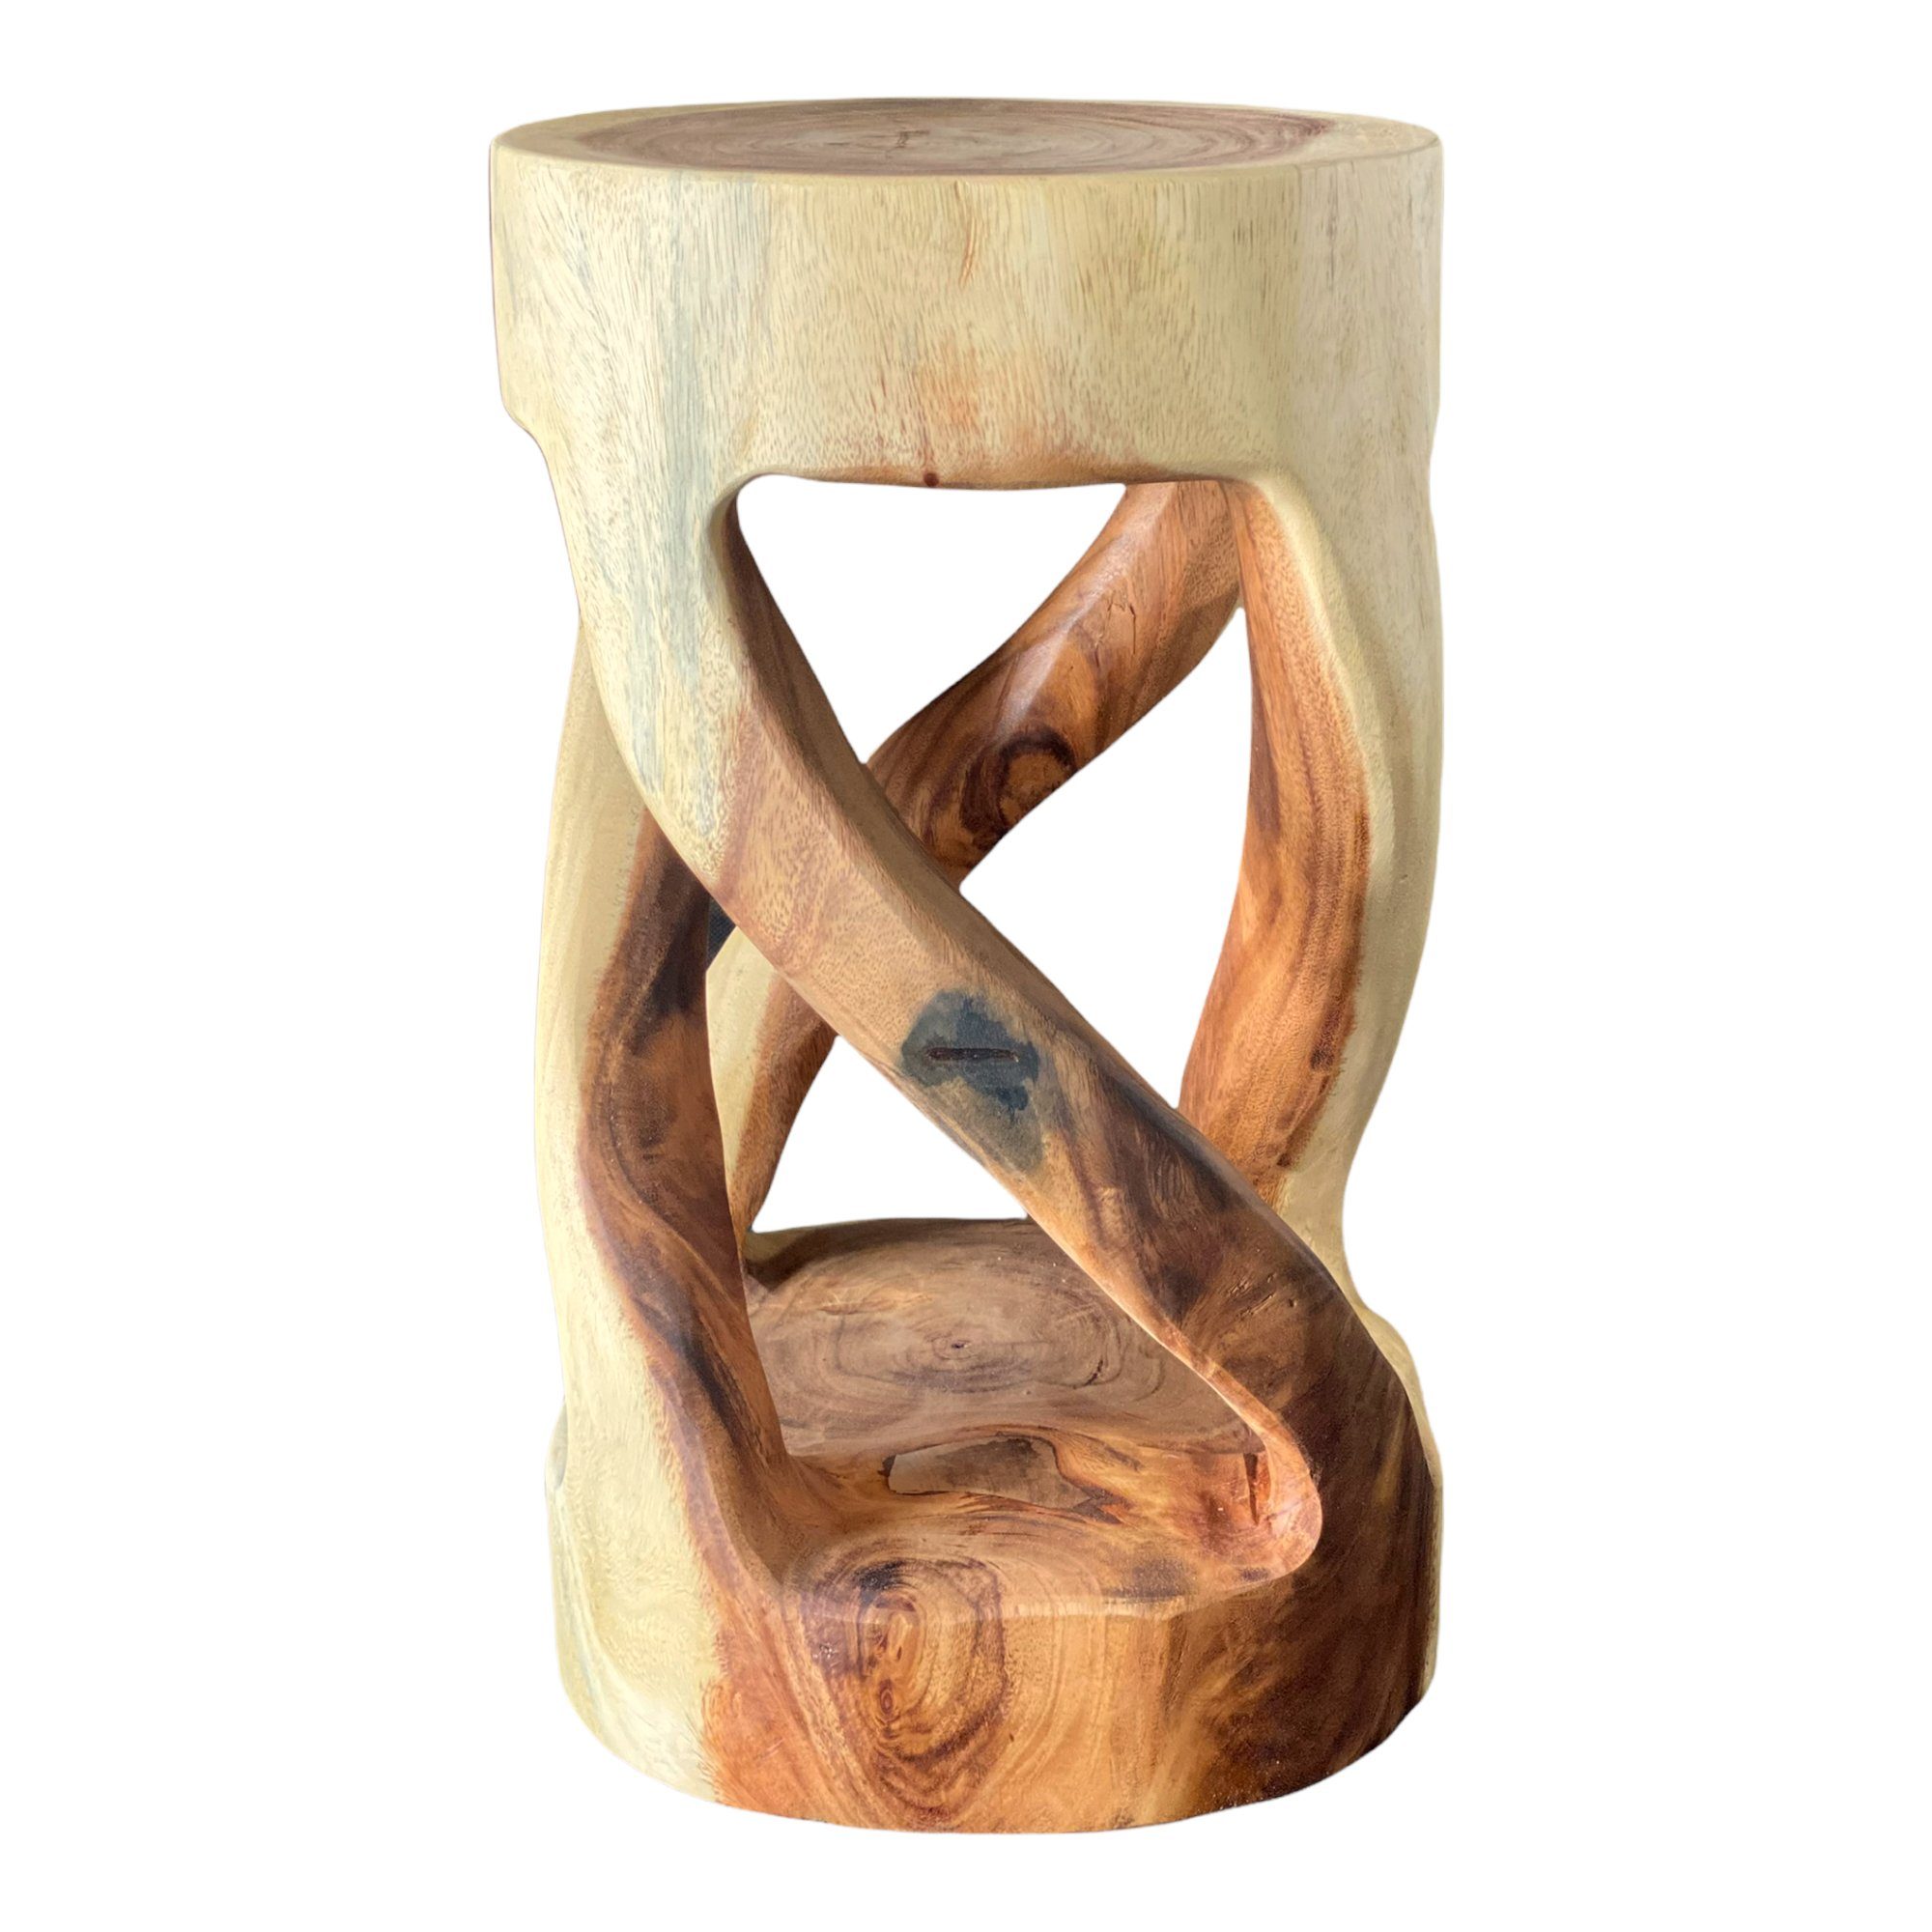 FaHome Beistelltisch Runder Holzhocker: Massiver (50x28x28) Massivholz Handgefertigt Suarholz Beistelltisch